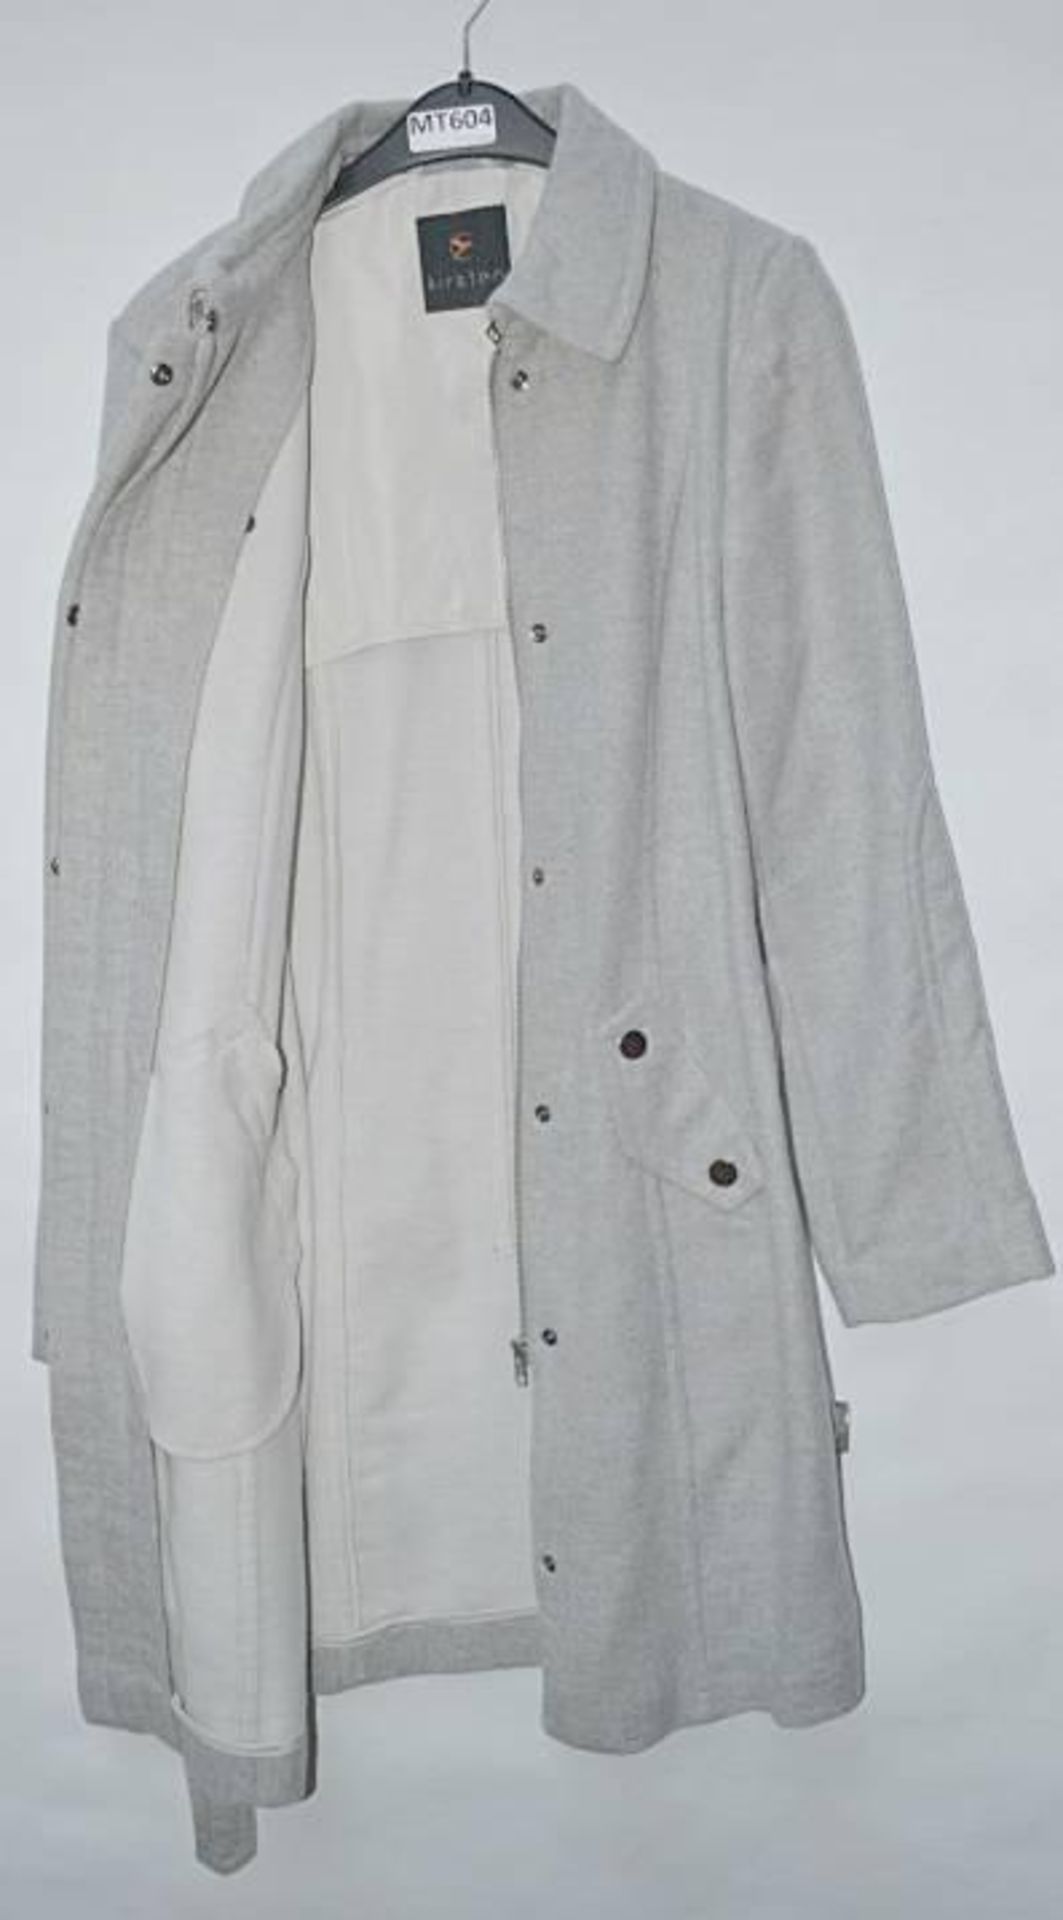 1 x Steilmann Kirsten Womens Wool Blend Belted Winter Coat In Light Grey - Size 12 - CL210 - Ref MT6 - Image 3 of 4